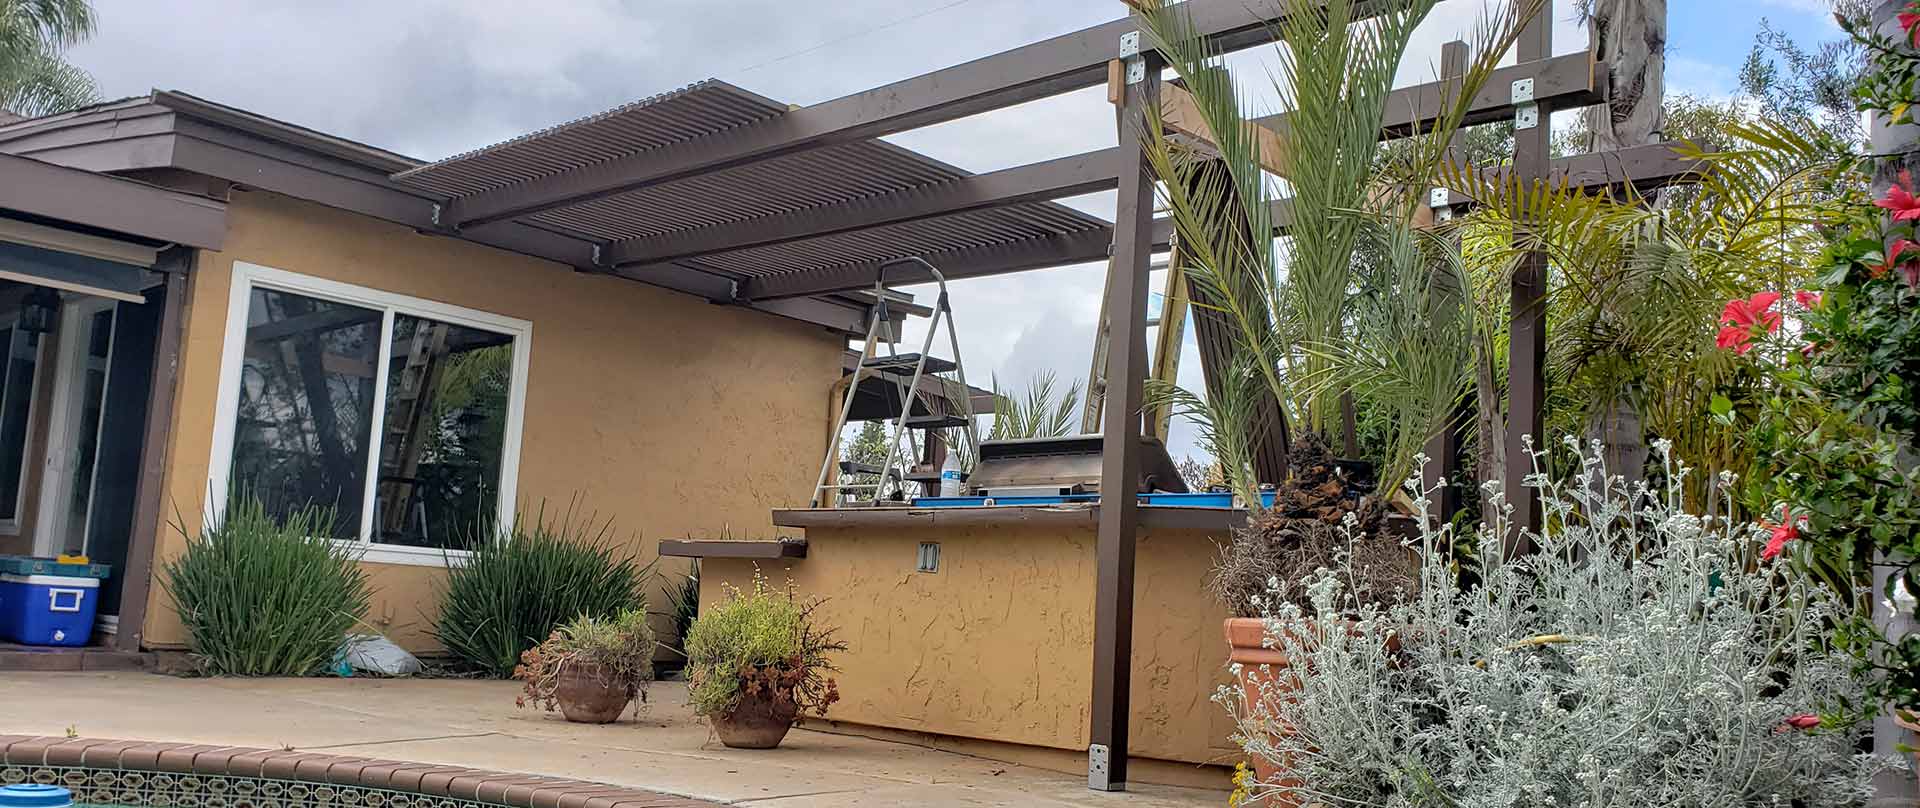 New Pergola Installation in Rancho Santa Fe